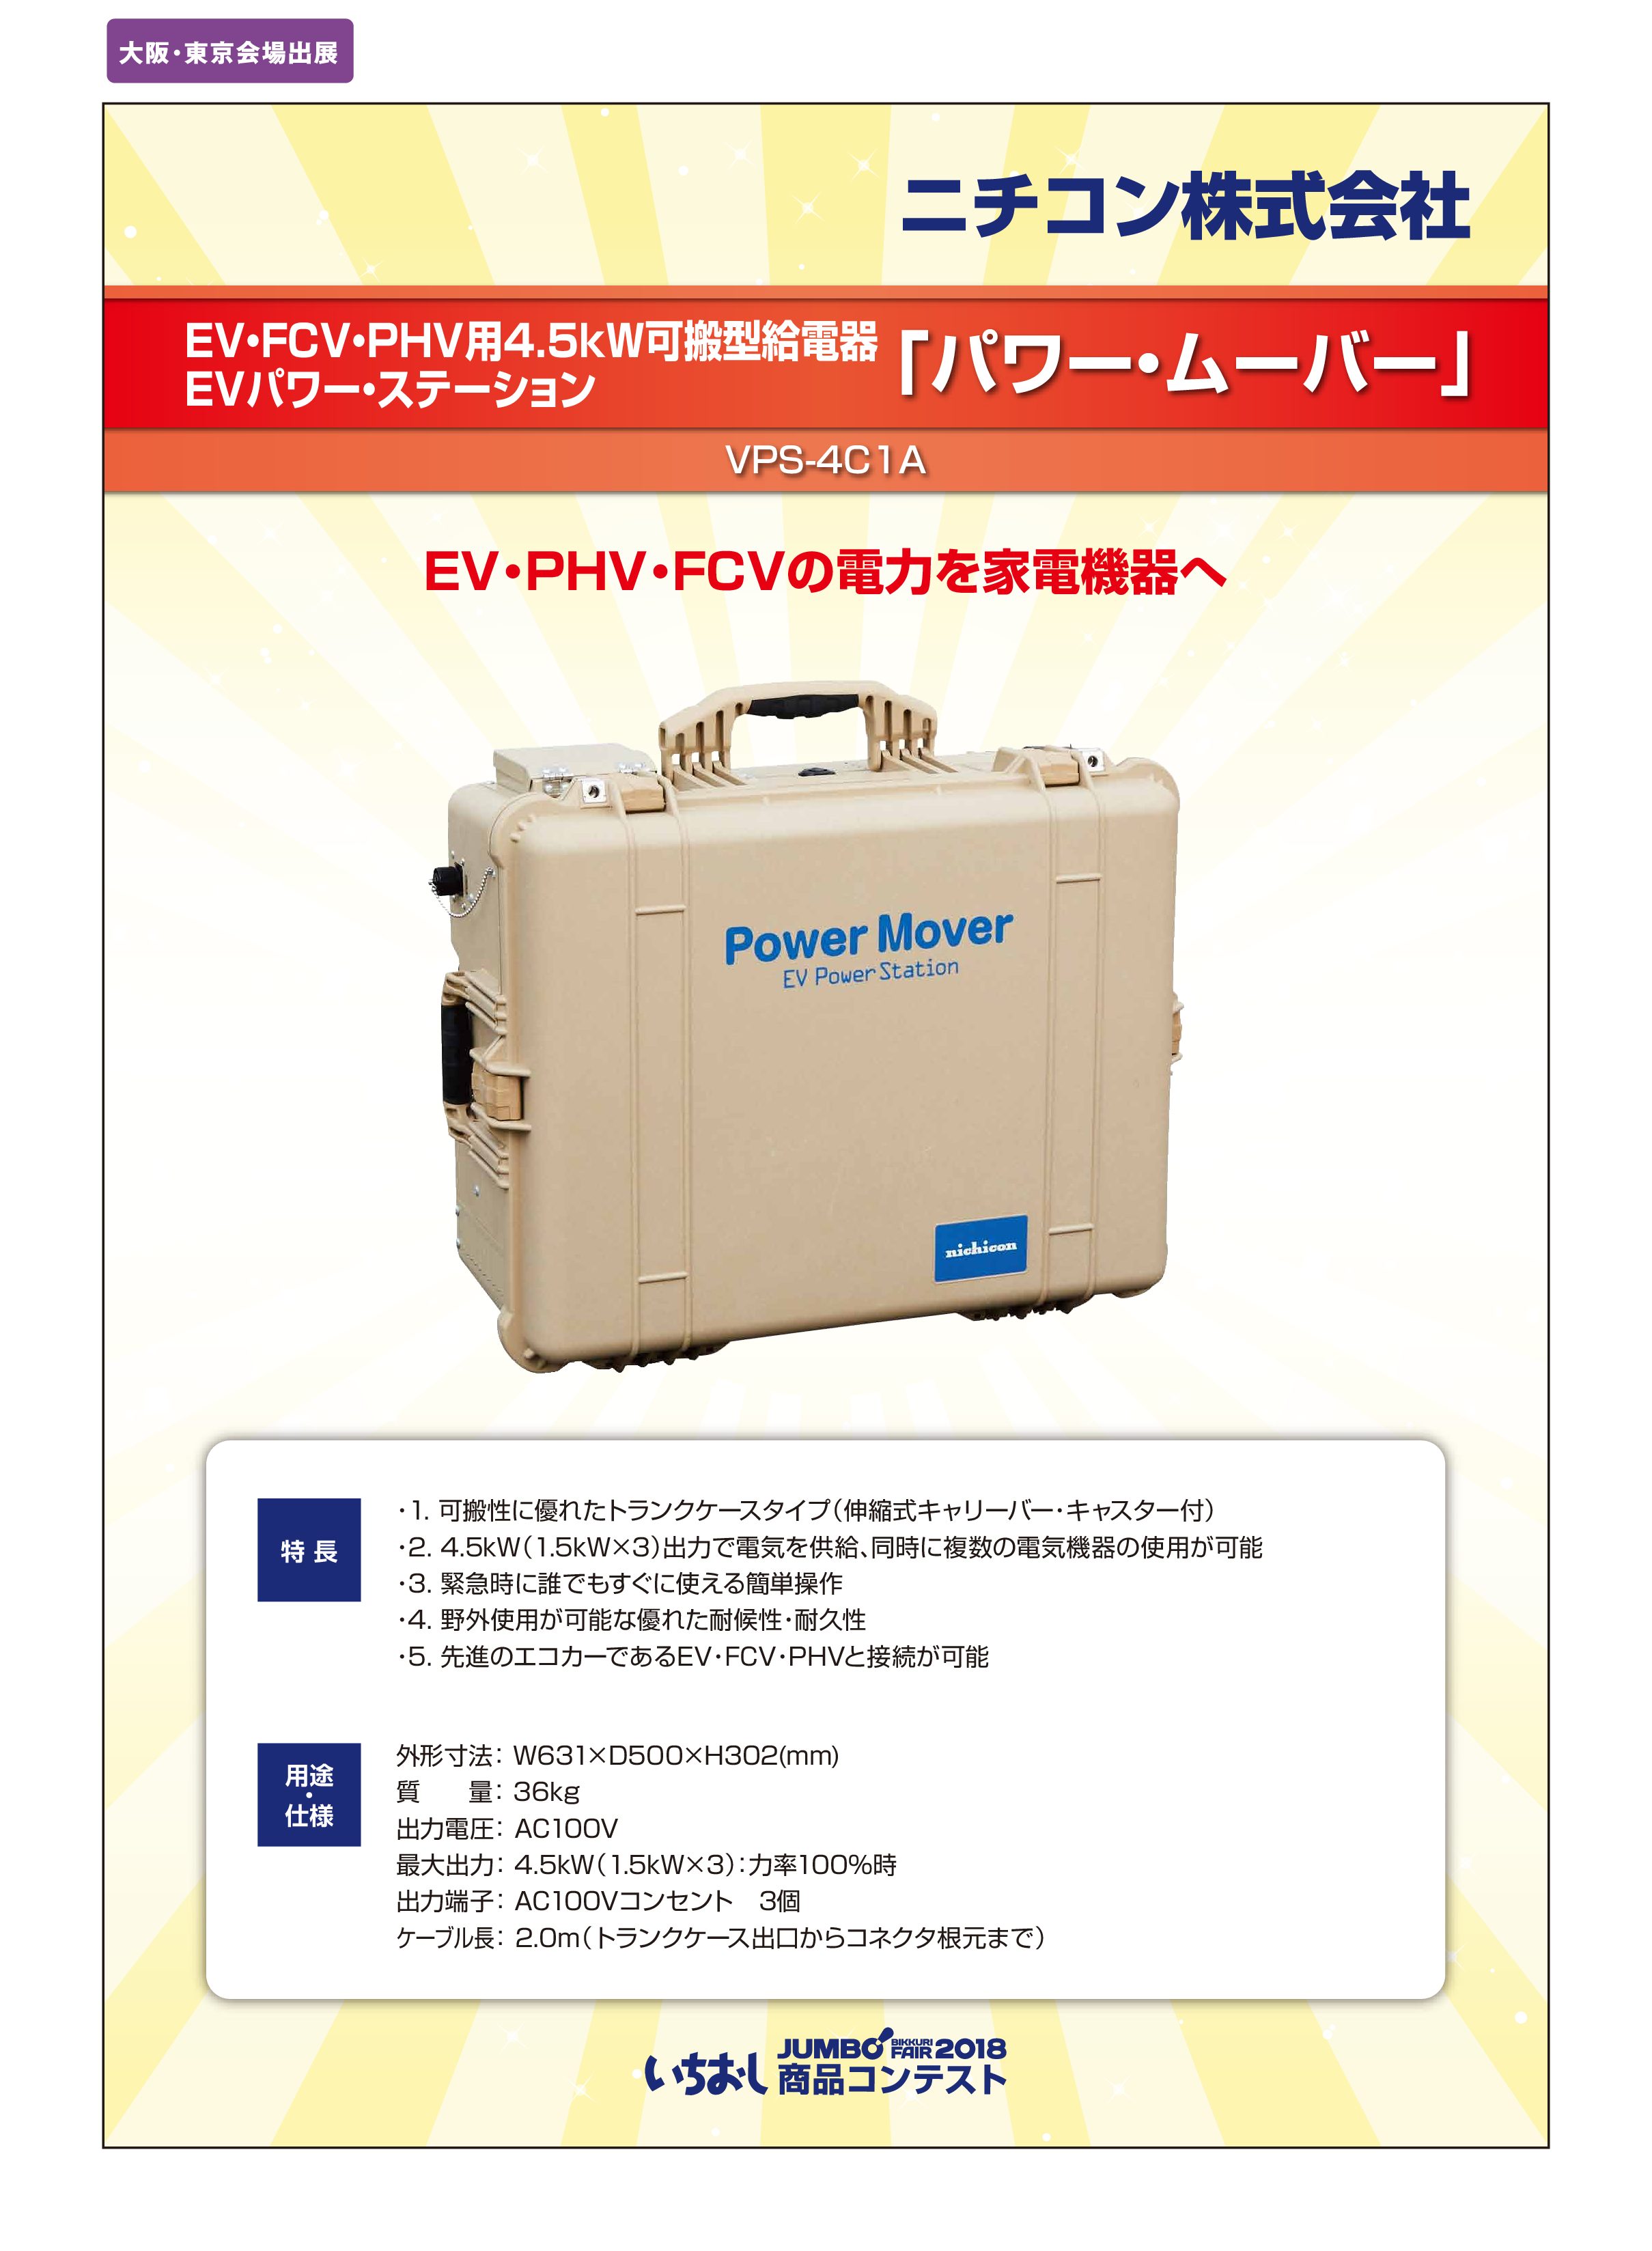 「EV・FCV・PHV用4.5kW可搬型給電器 EVパワー・ステーション『パワー・ムーバー』」ニチコン株式会社の画像